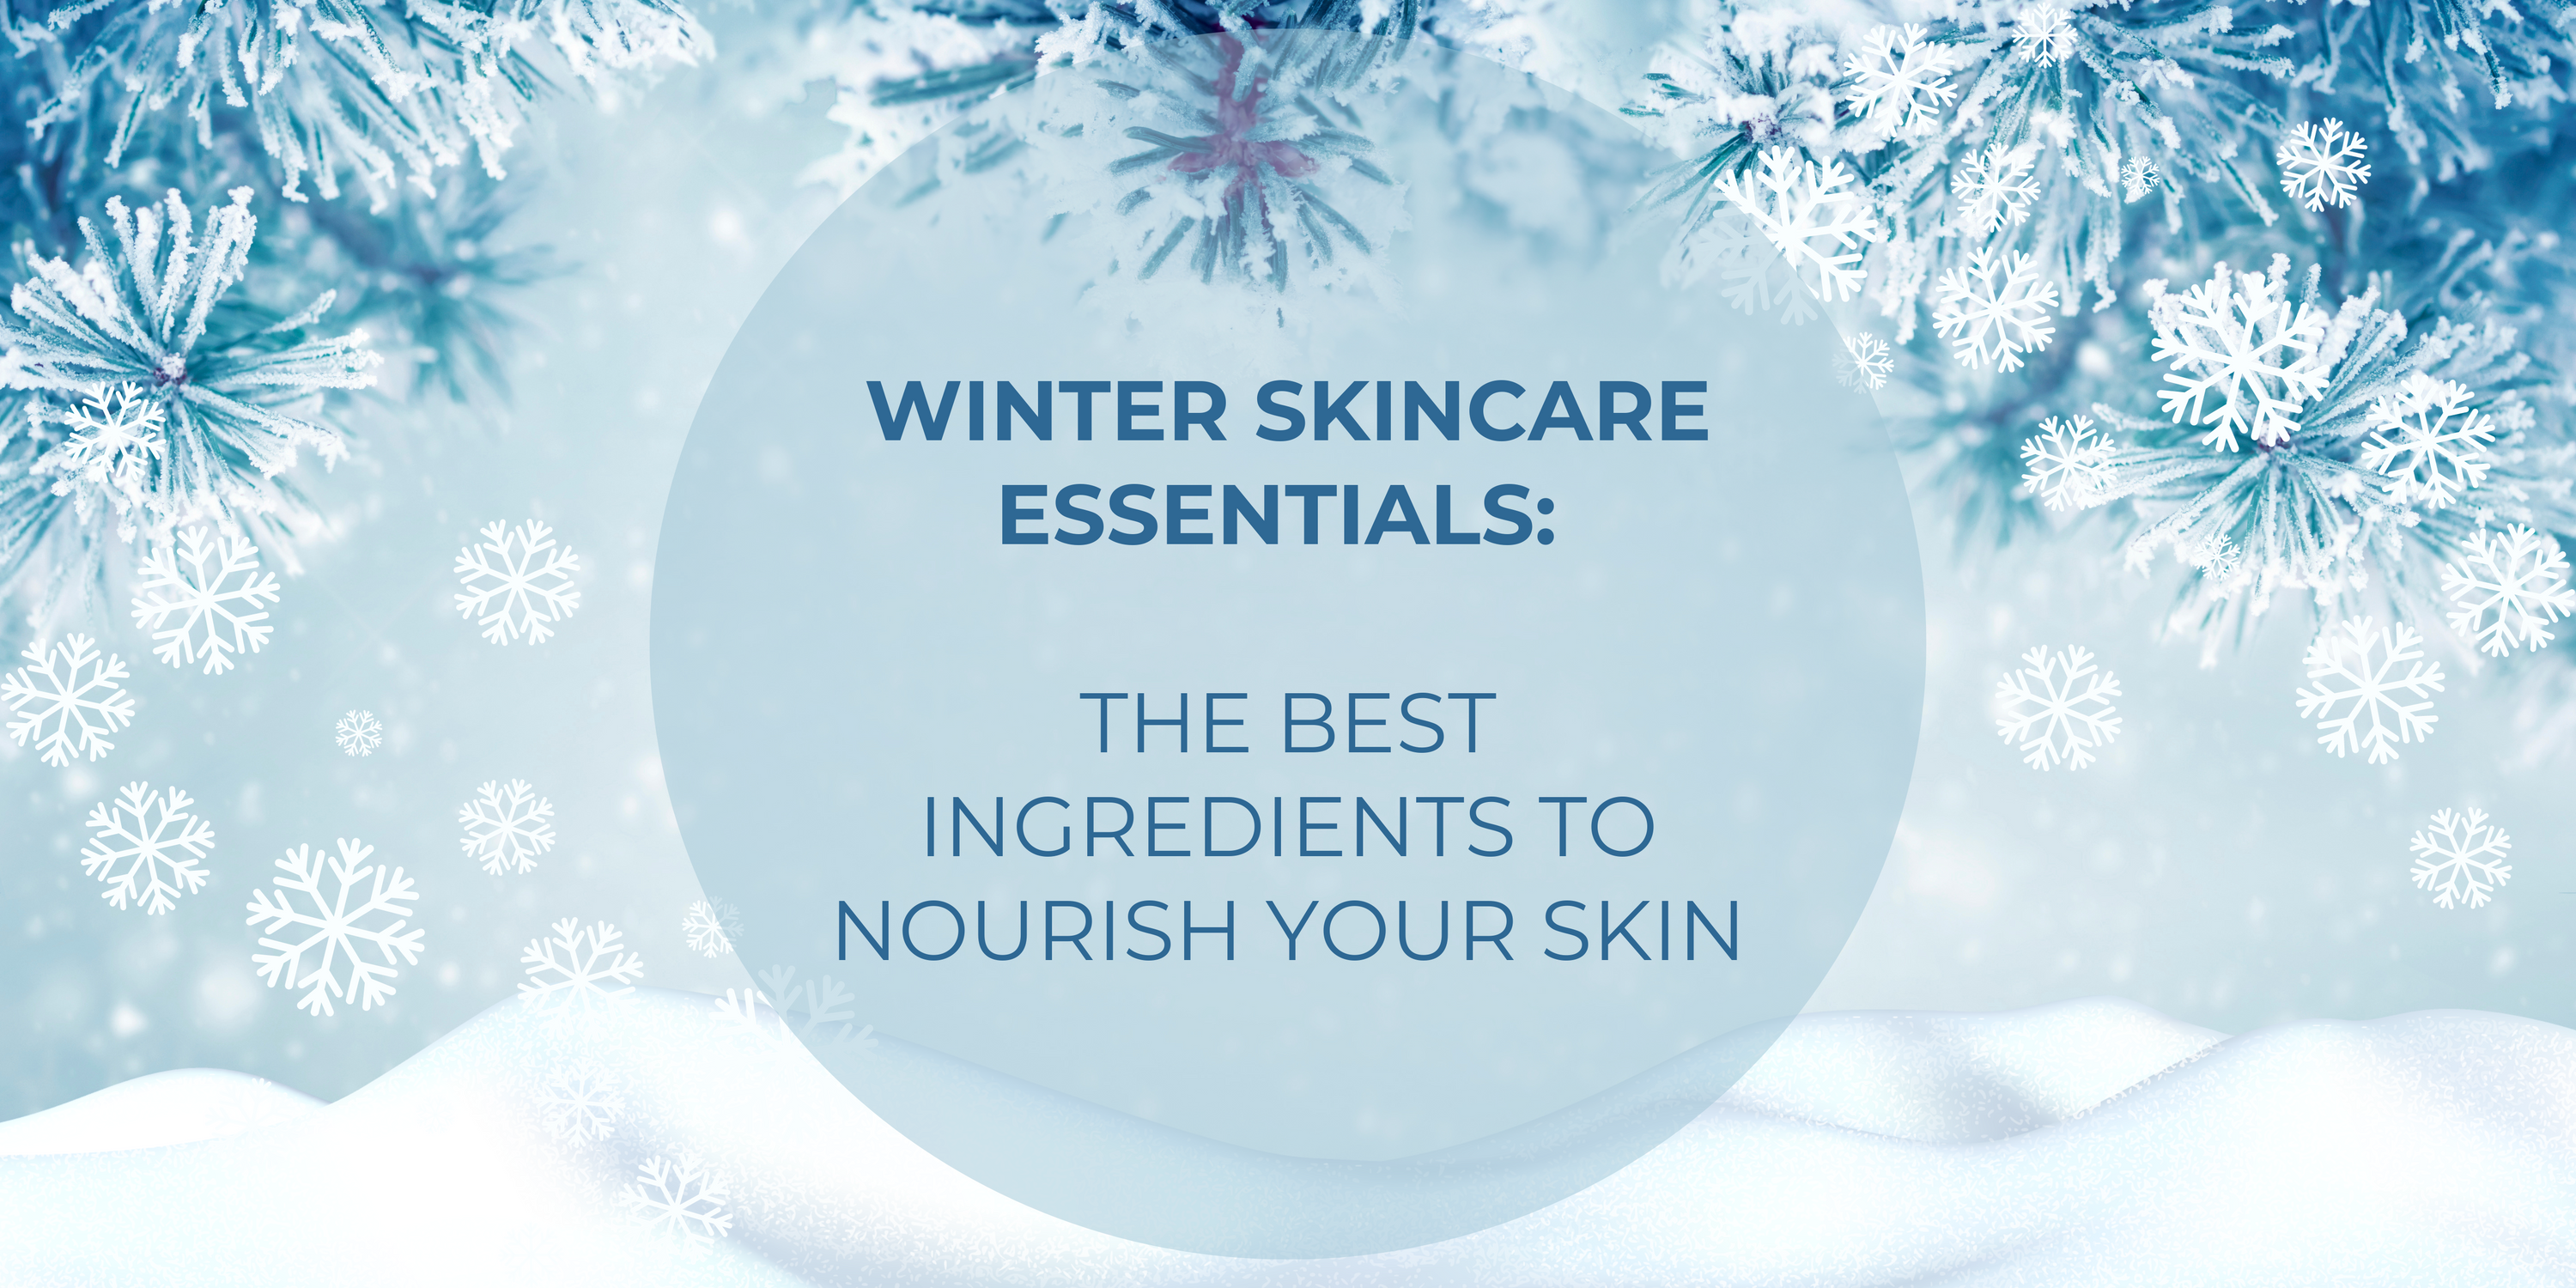 Winter Skincare Essentials: The Best Ingredients to Nourish Your Skin